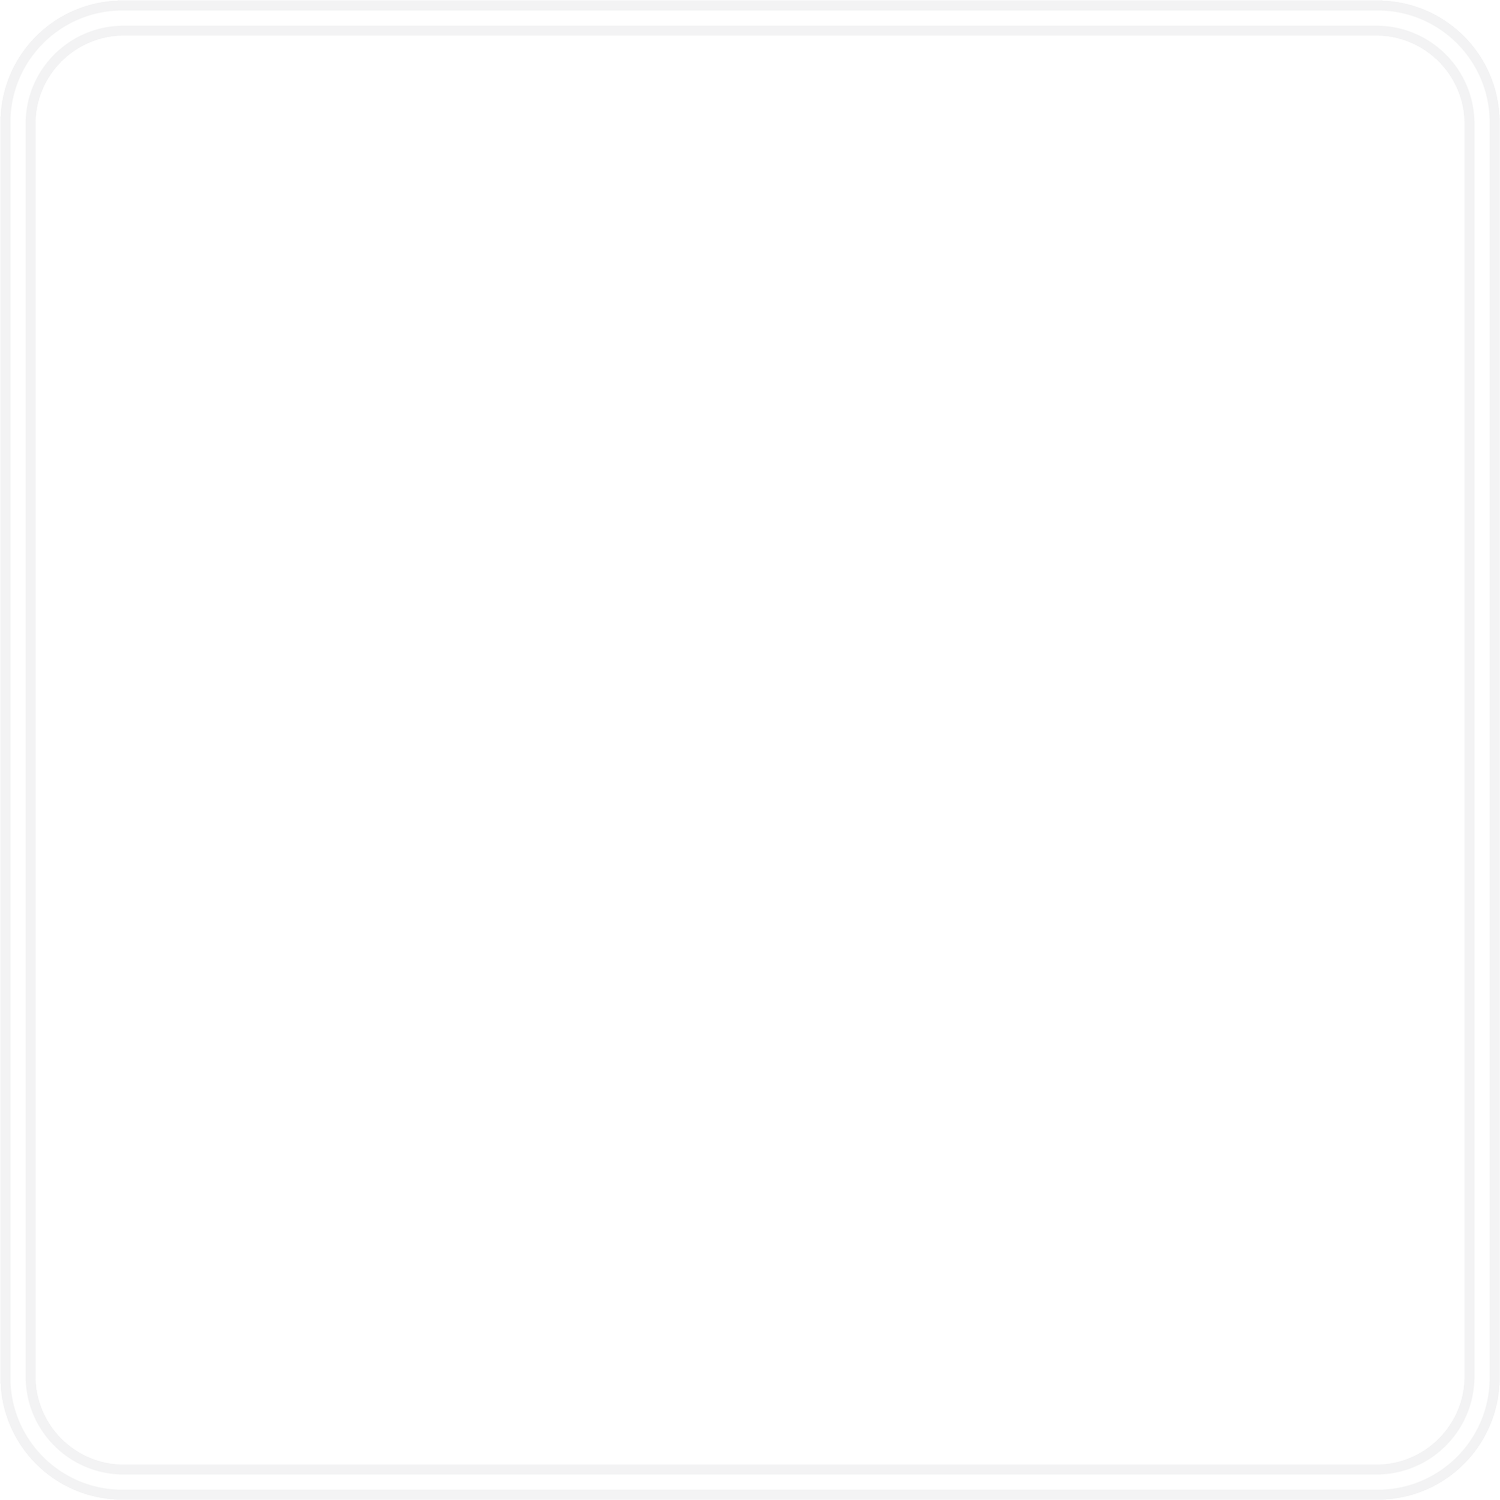 WOLFRAM LABS